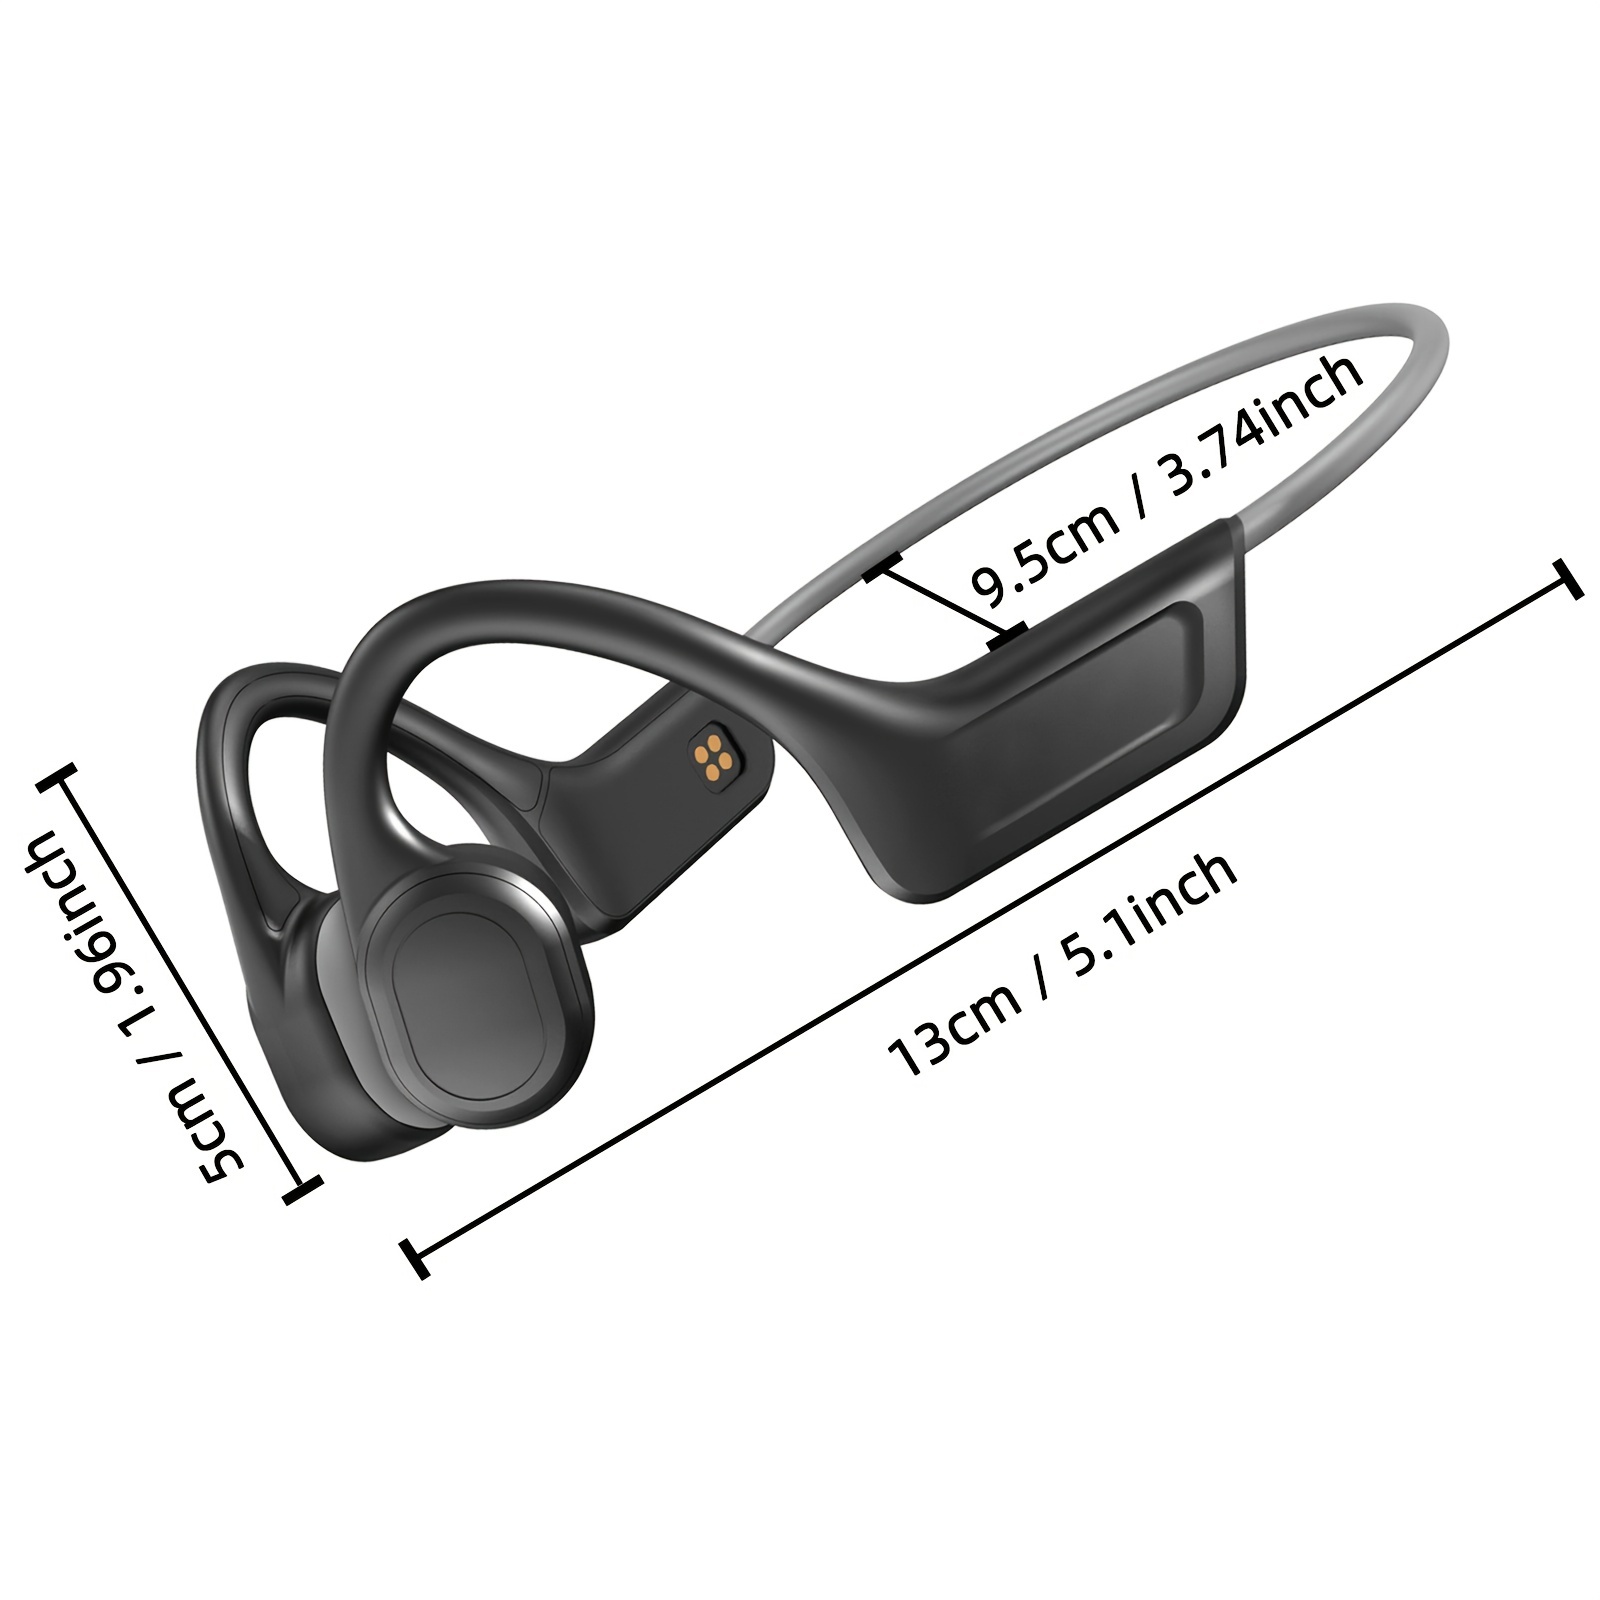 Auriculares De Conduccion Osea Bluetooth Inalambrico - Temu Chile